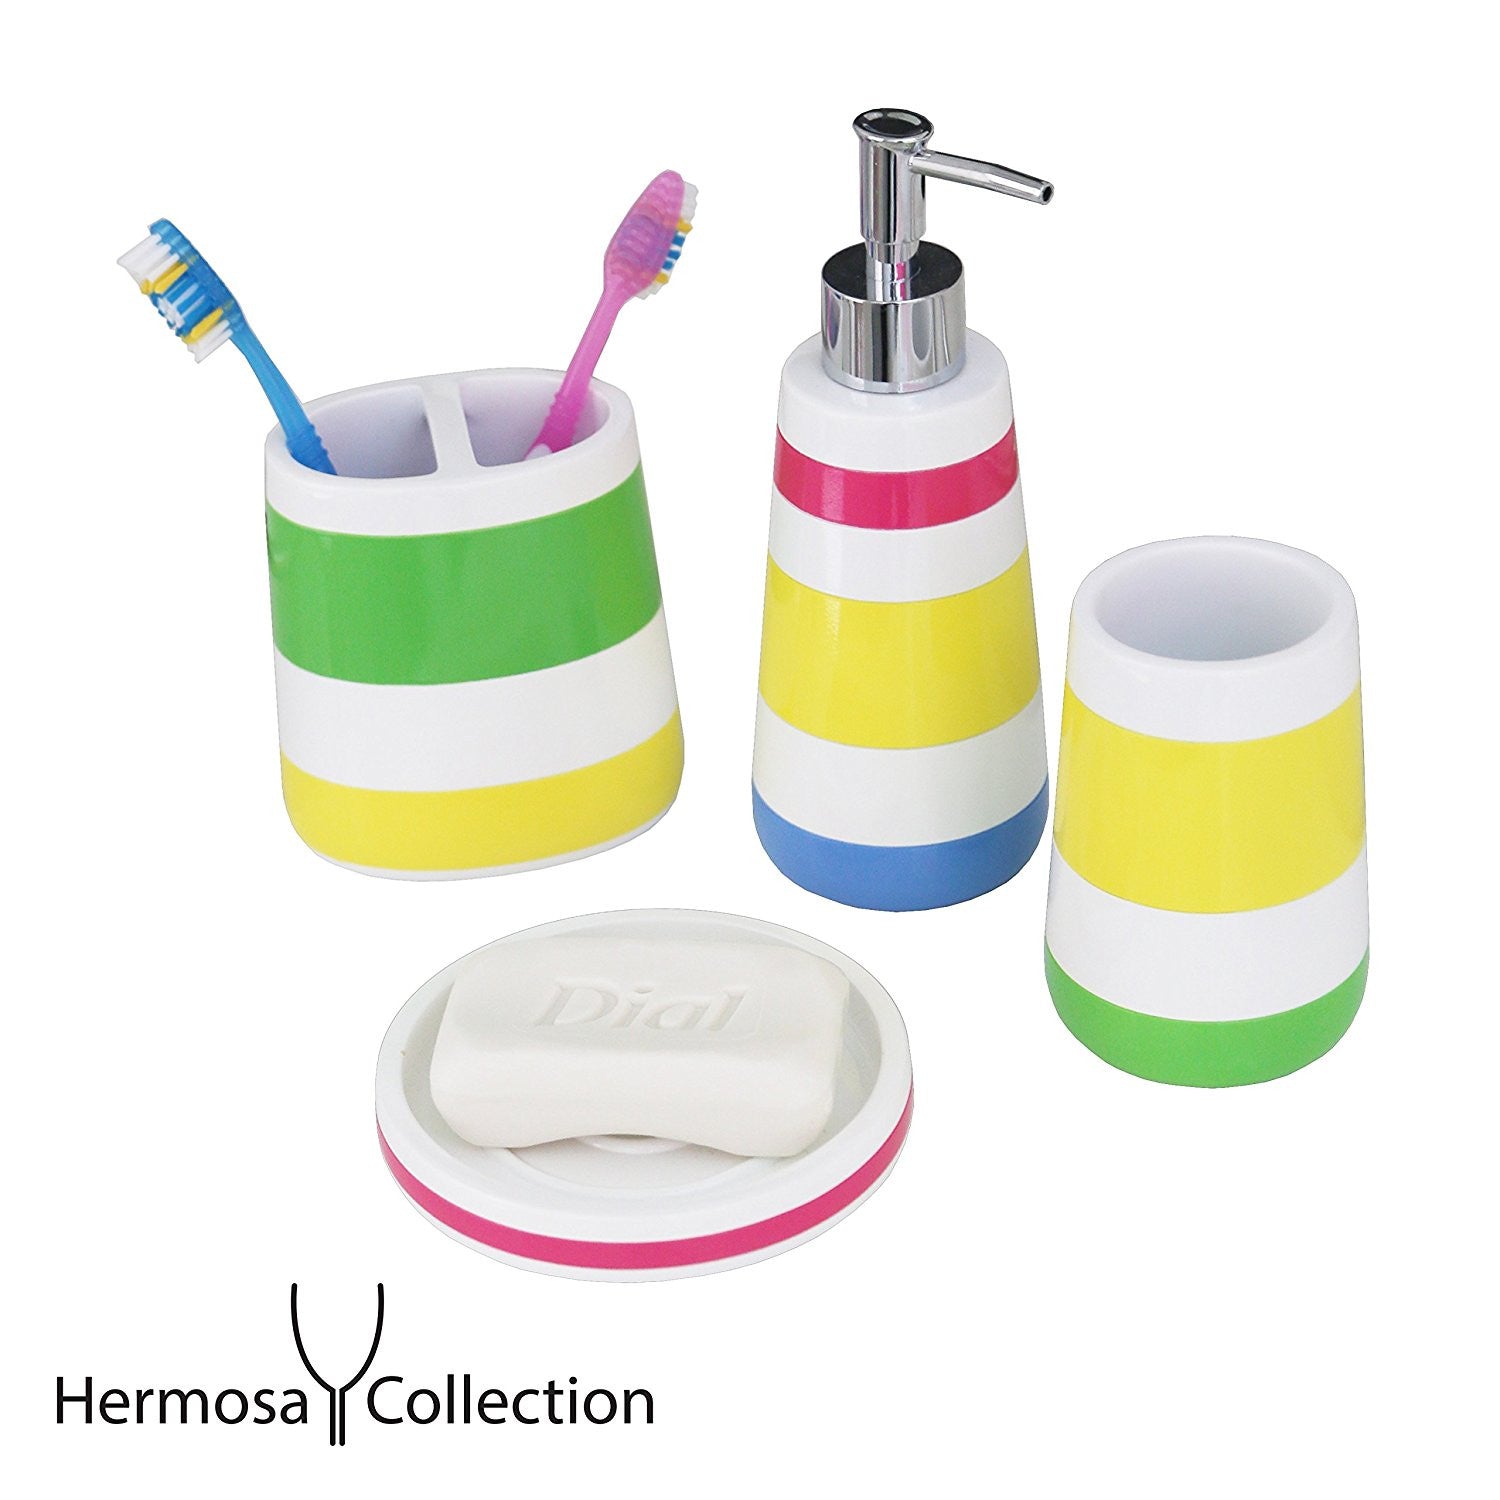 Hermosa Collection Four Piece Kids Bathroom Accessories Set